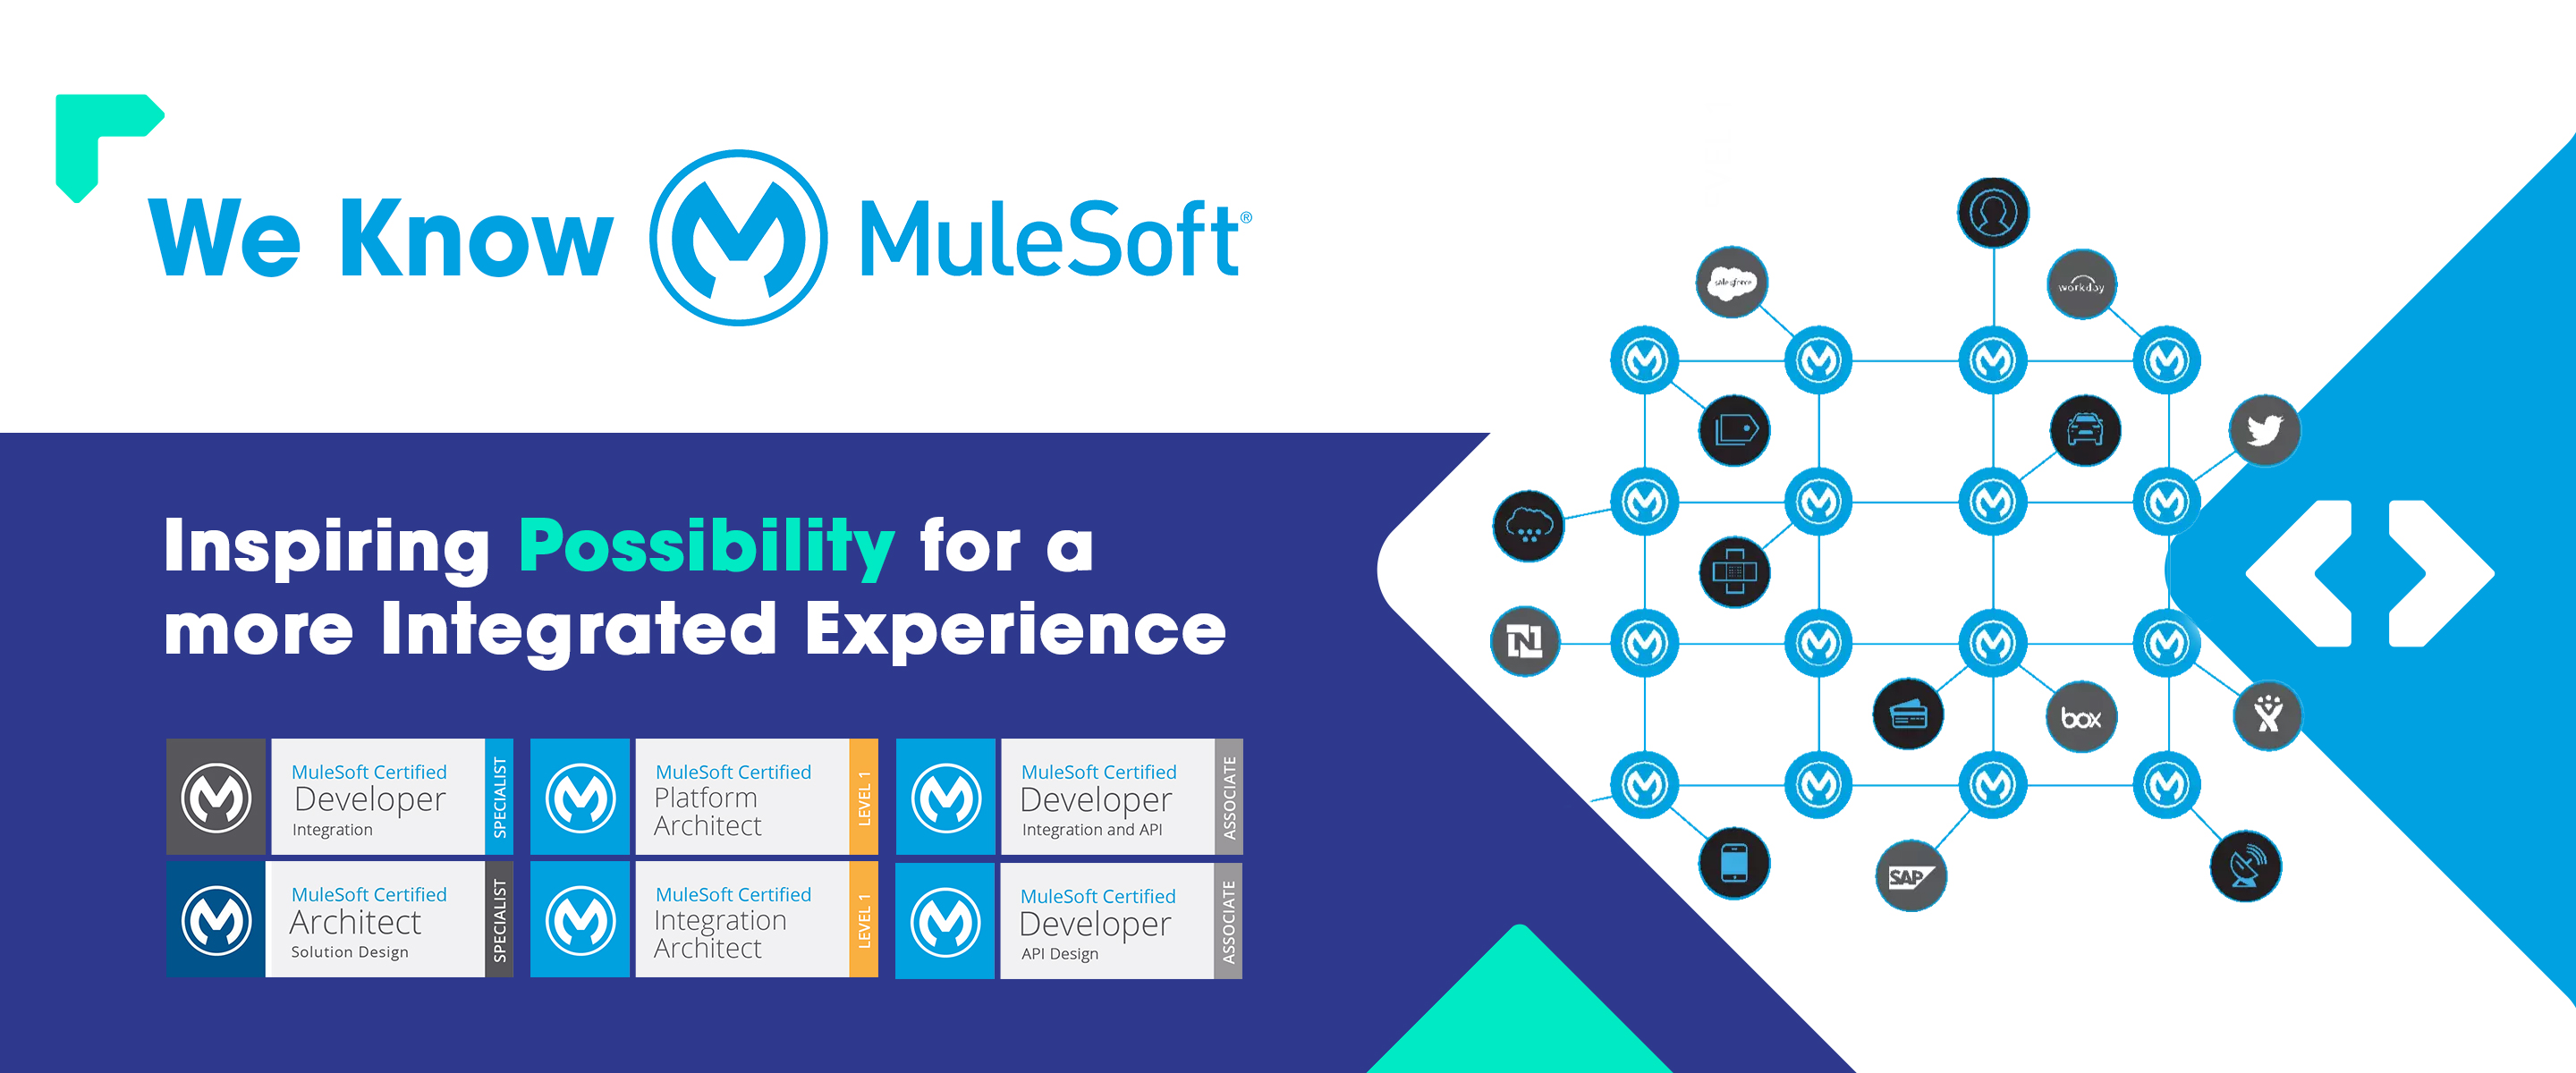 mulesoft developers, mulesoft development, mulesoft experts, mulesoft developer, mulesoft expert